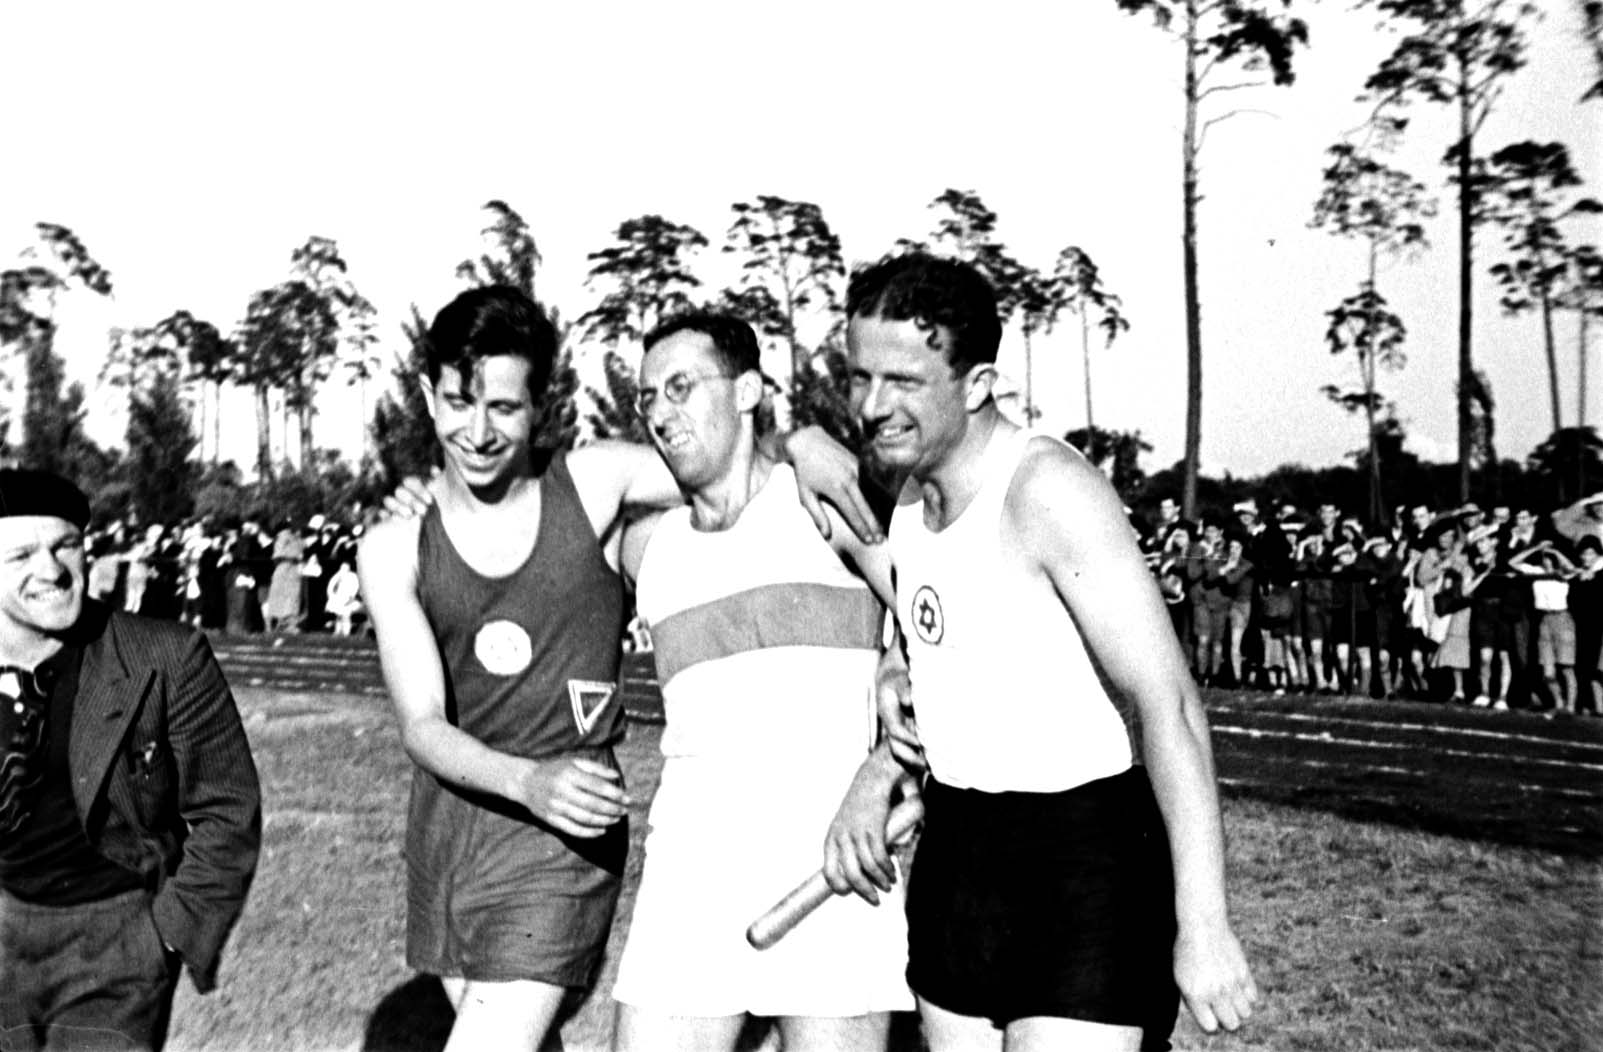 Berlin, Germany, 16/6/1935, Frankenstein, Dreyer and Orgler. Track and field athletes at the Makkabi Berlin International Sports Day